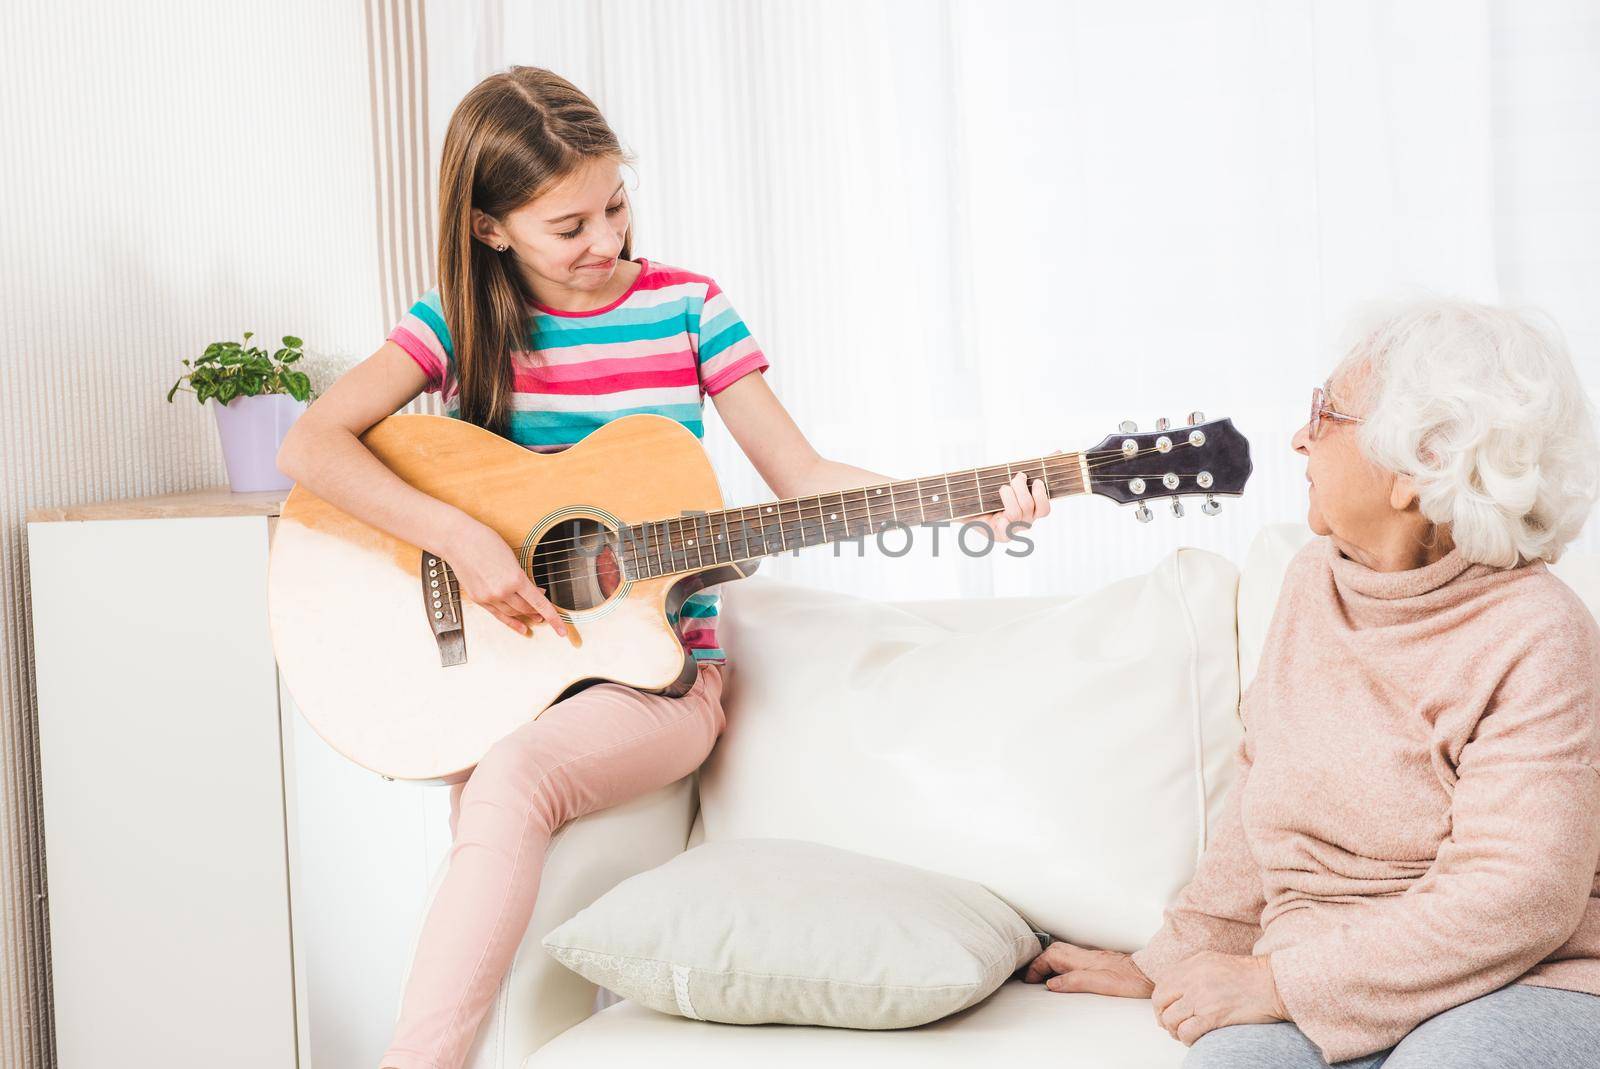 Granddaughter playing on guitar for grandmother by GekaSkr